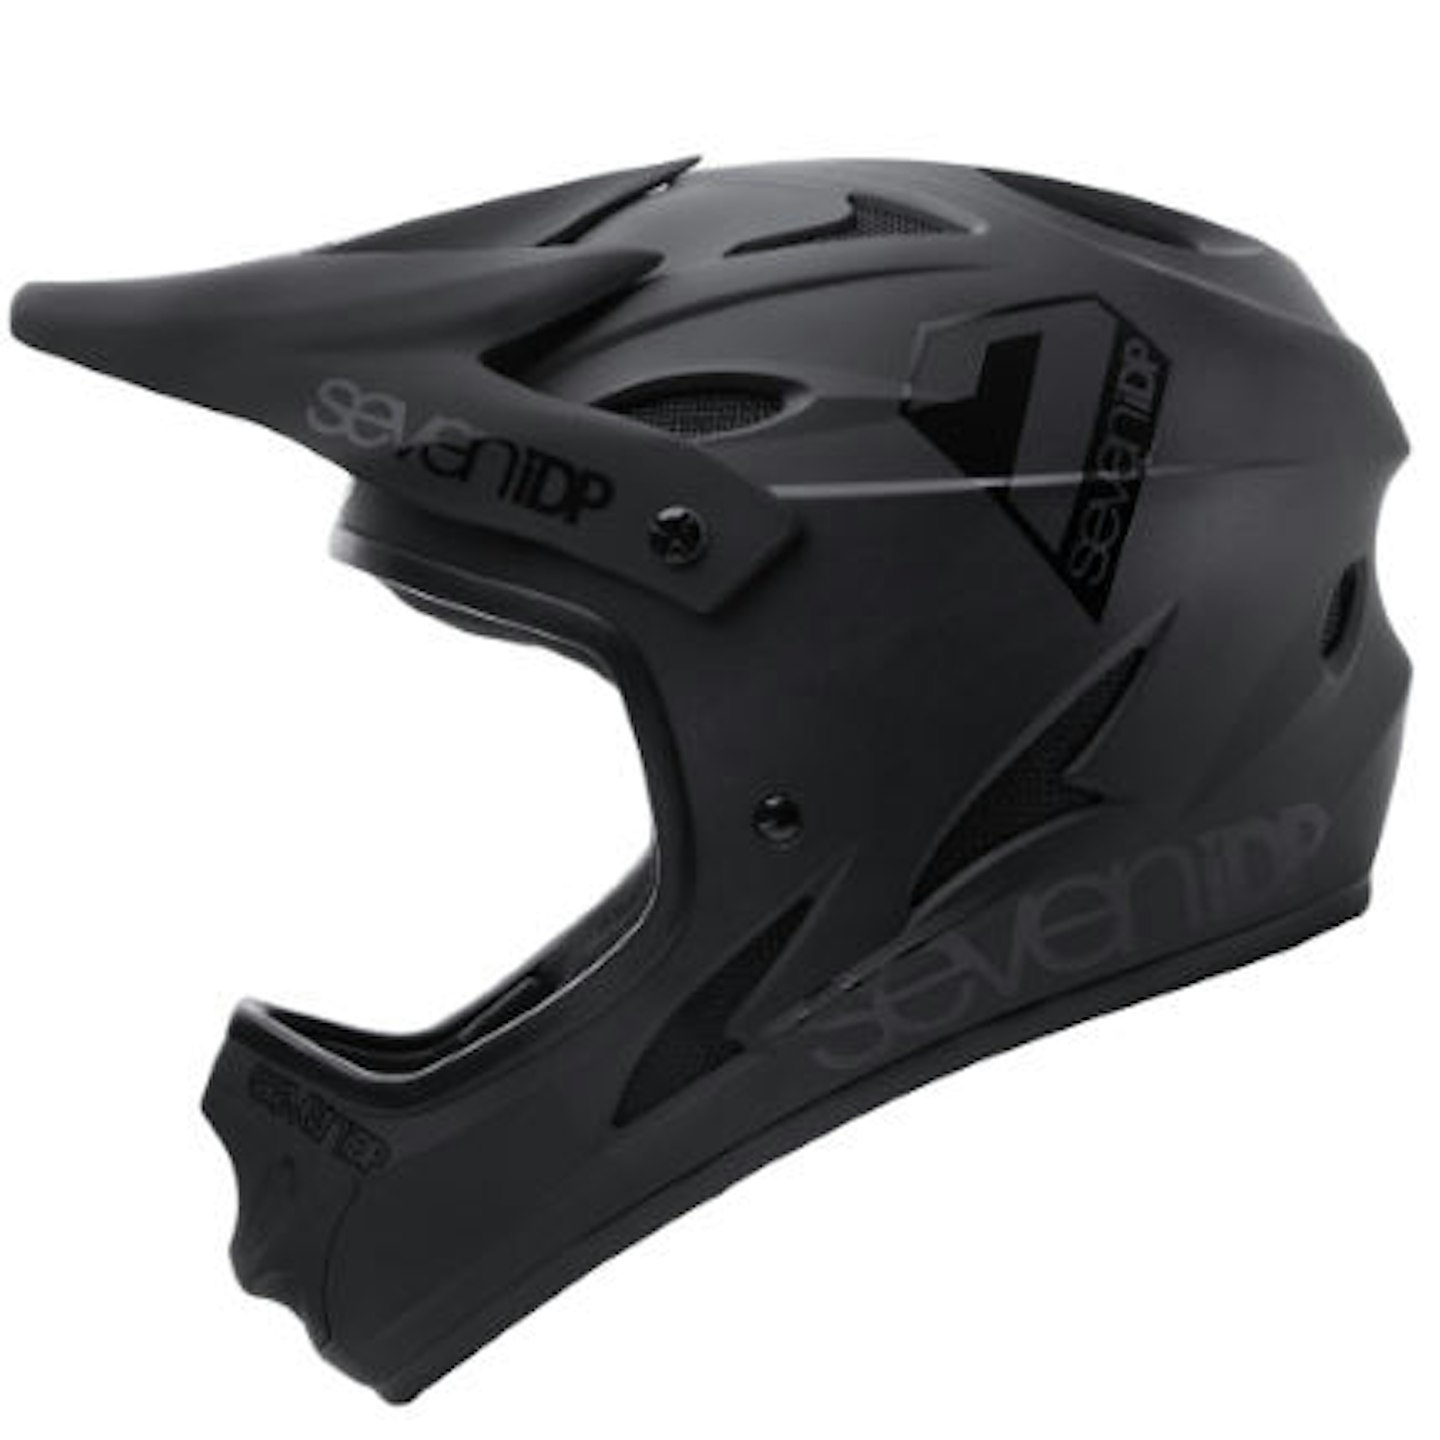 7iDP M1 full-face helmet